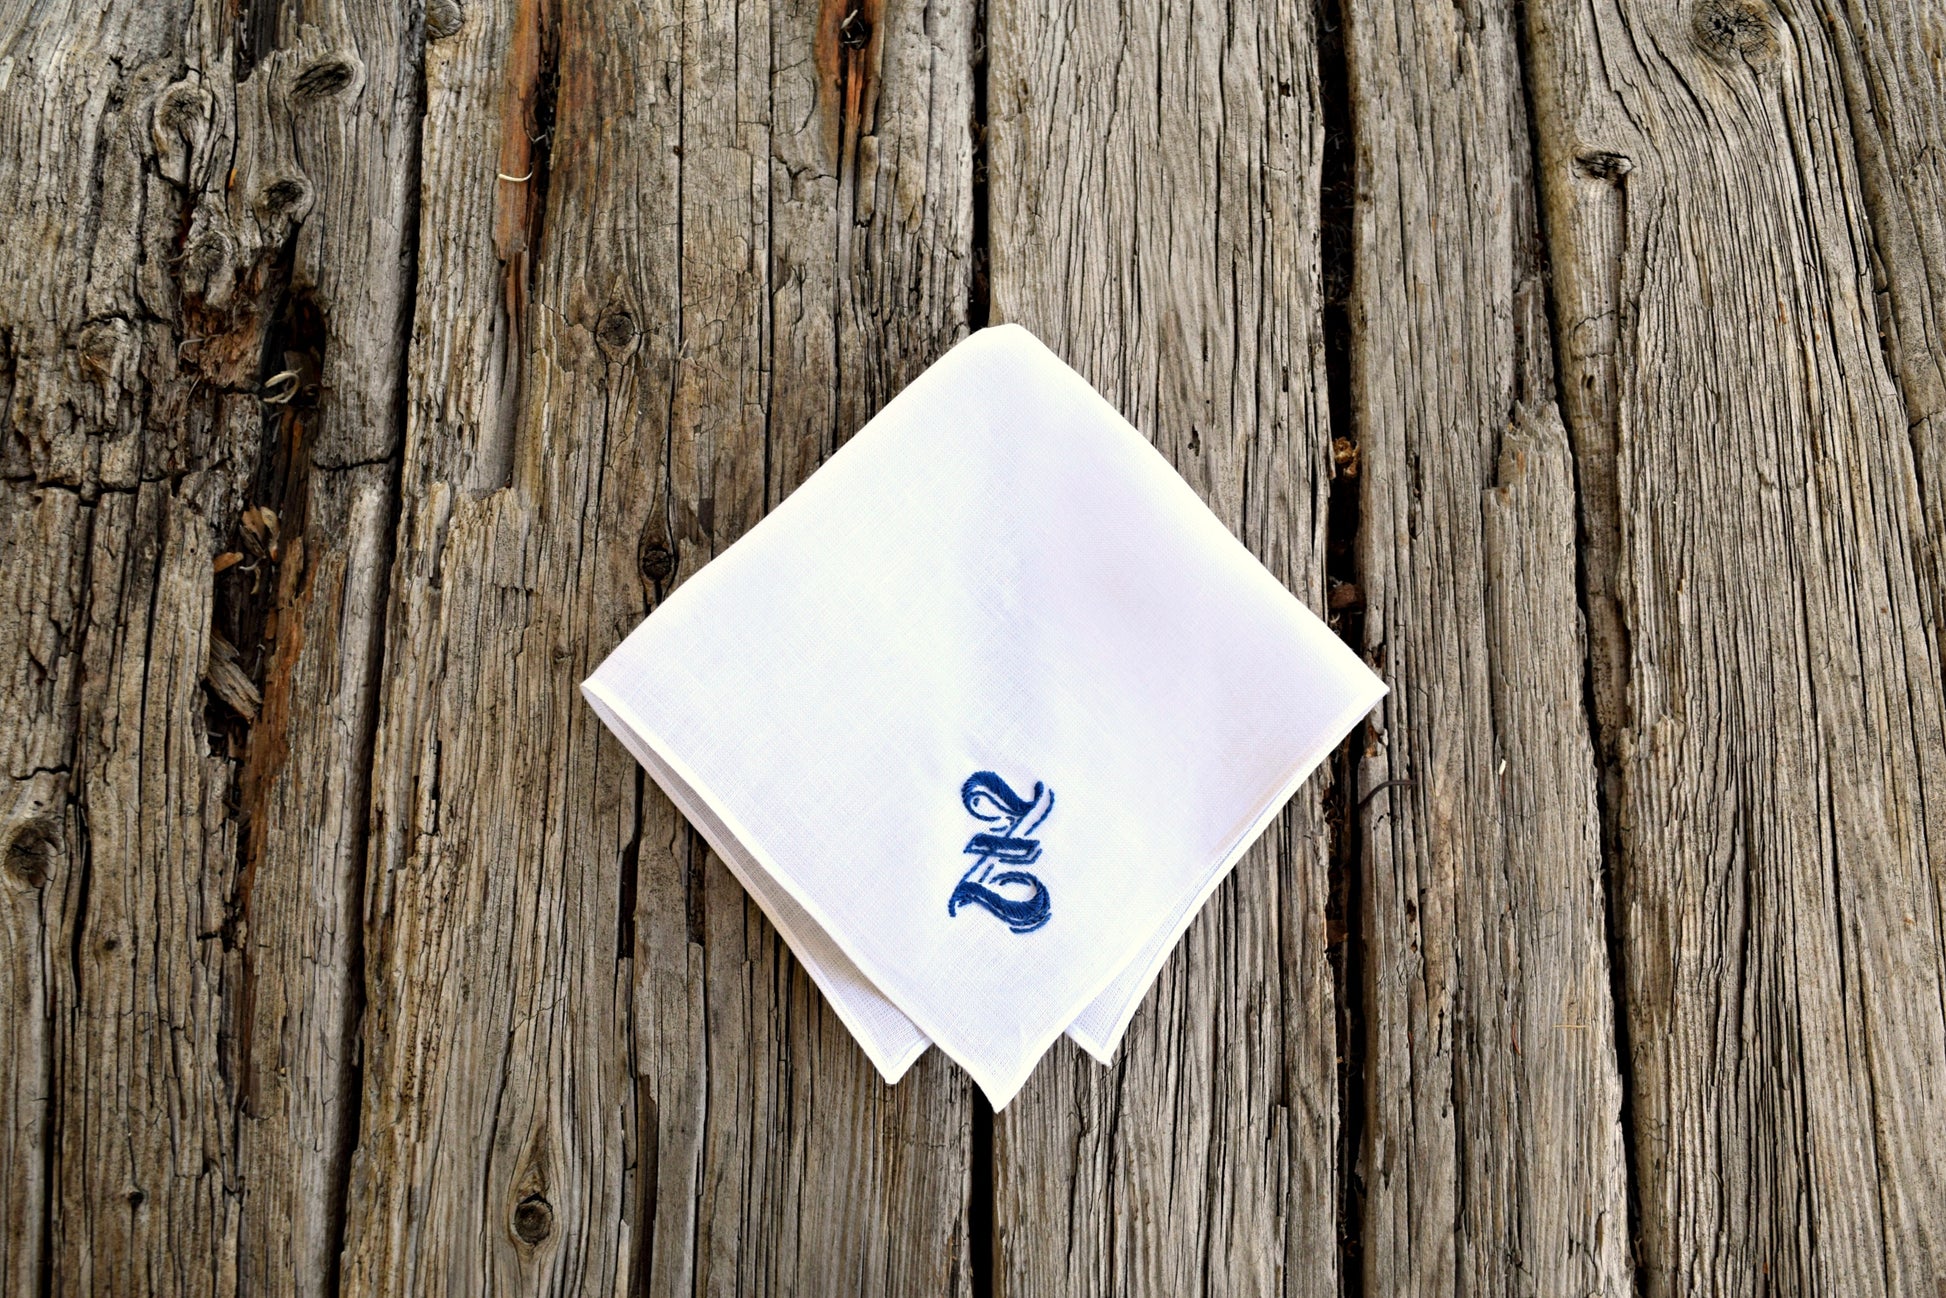 Z hand embroidered on white irish linen handkerchief on wood background